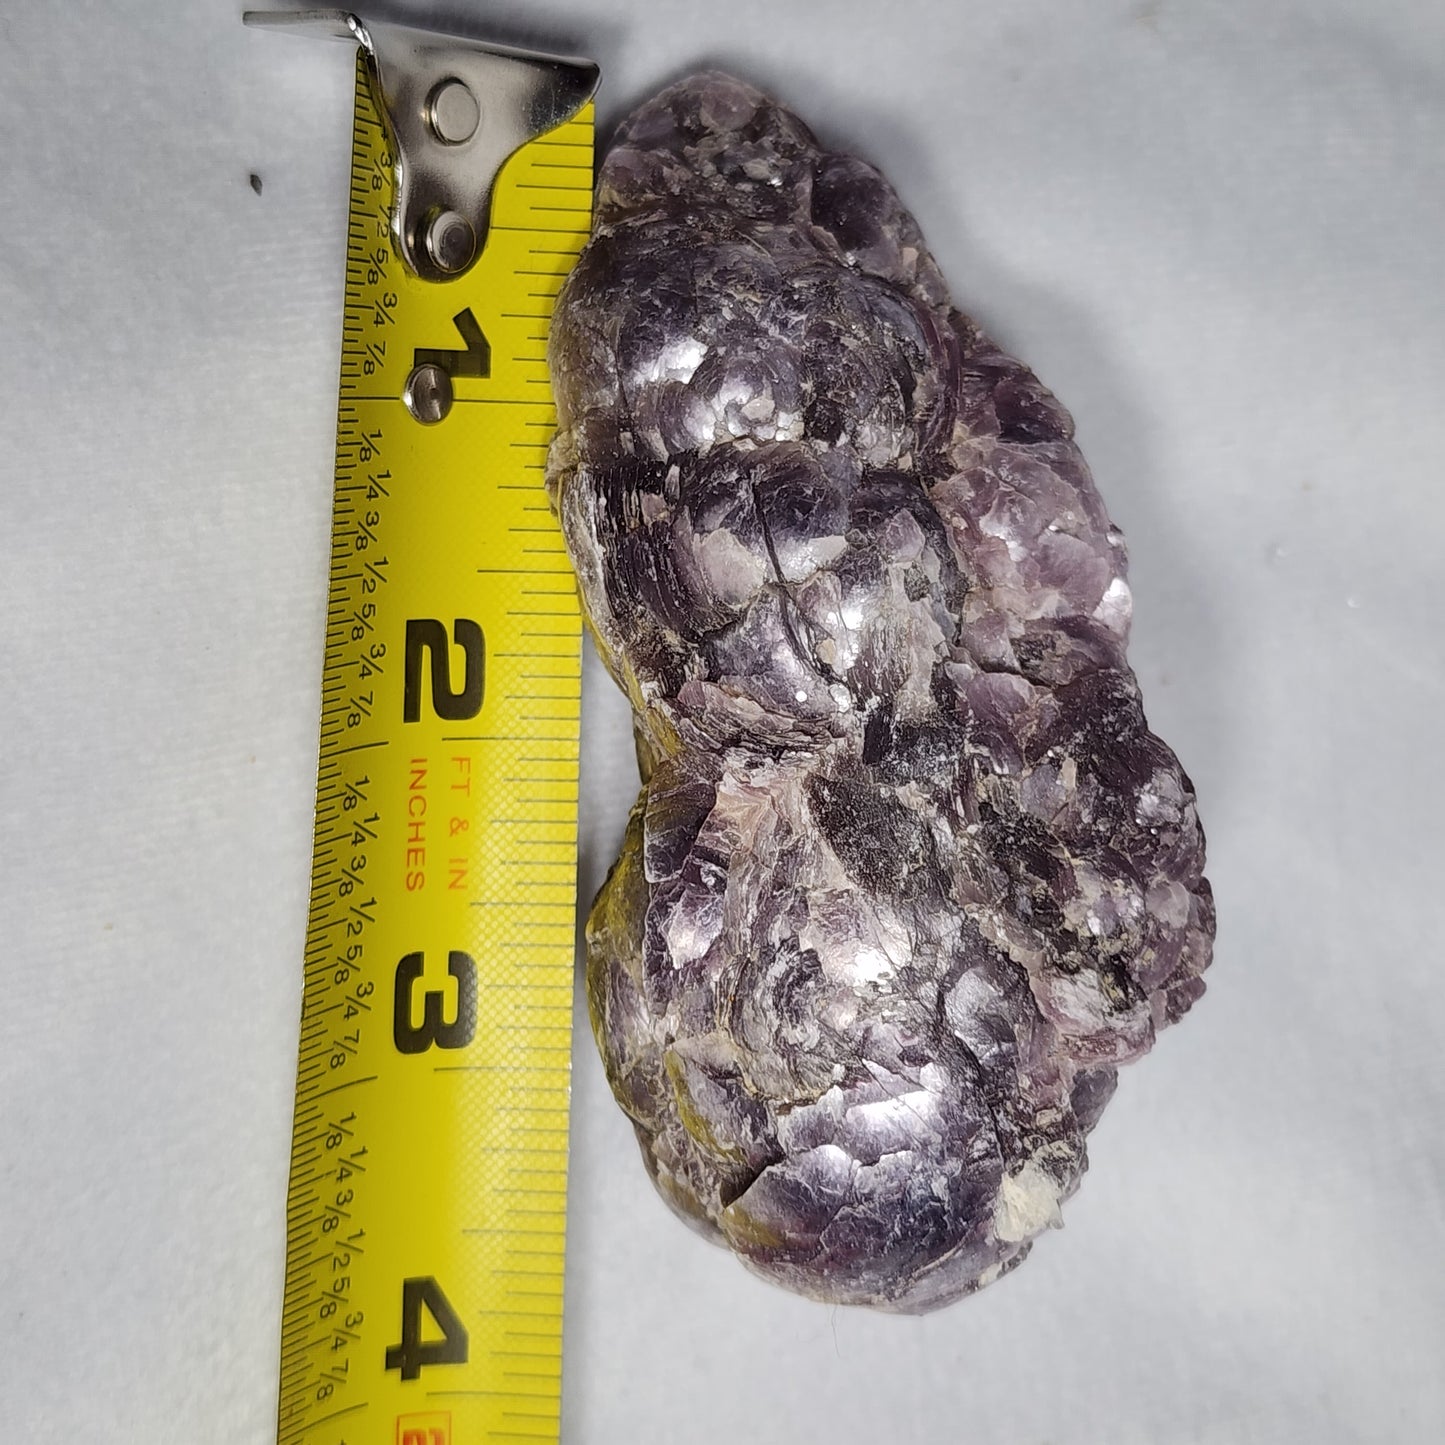 Purple Botryoidal Lepidolite